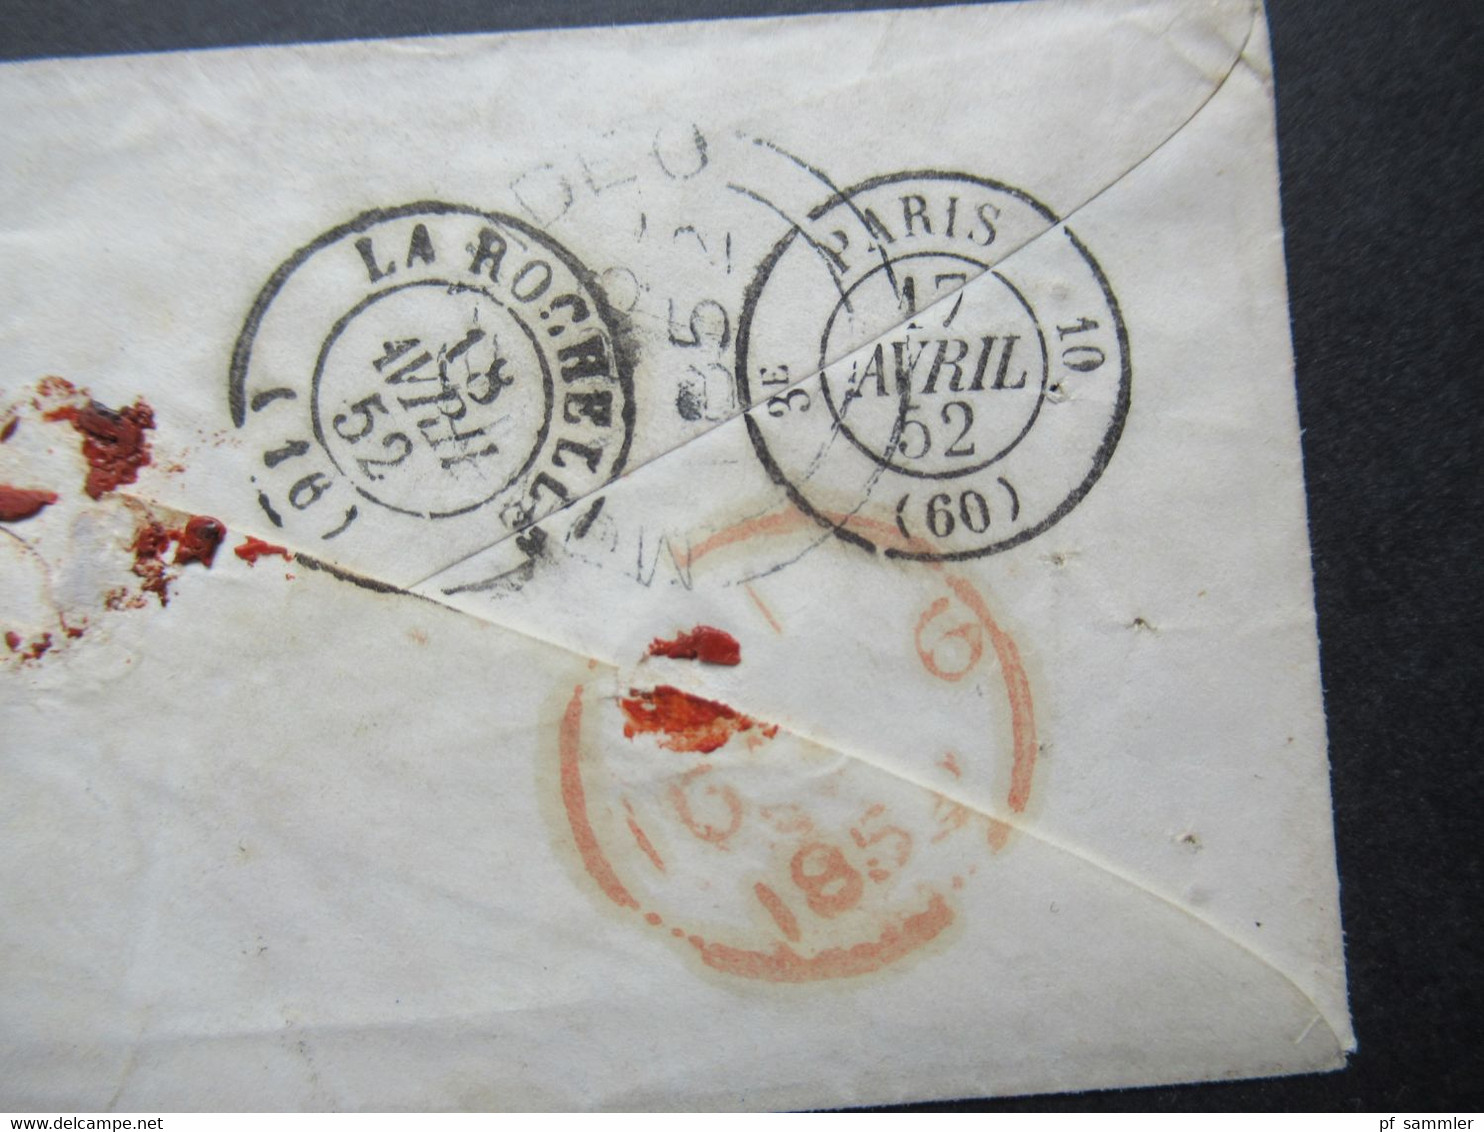 Frankreich 1852 Paketbegleitbrief / Par Paket anglais von Montevideo - La Rochelle über England mit Ra2 Colonies Art.13